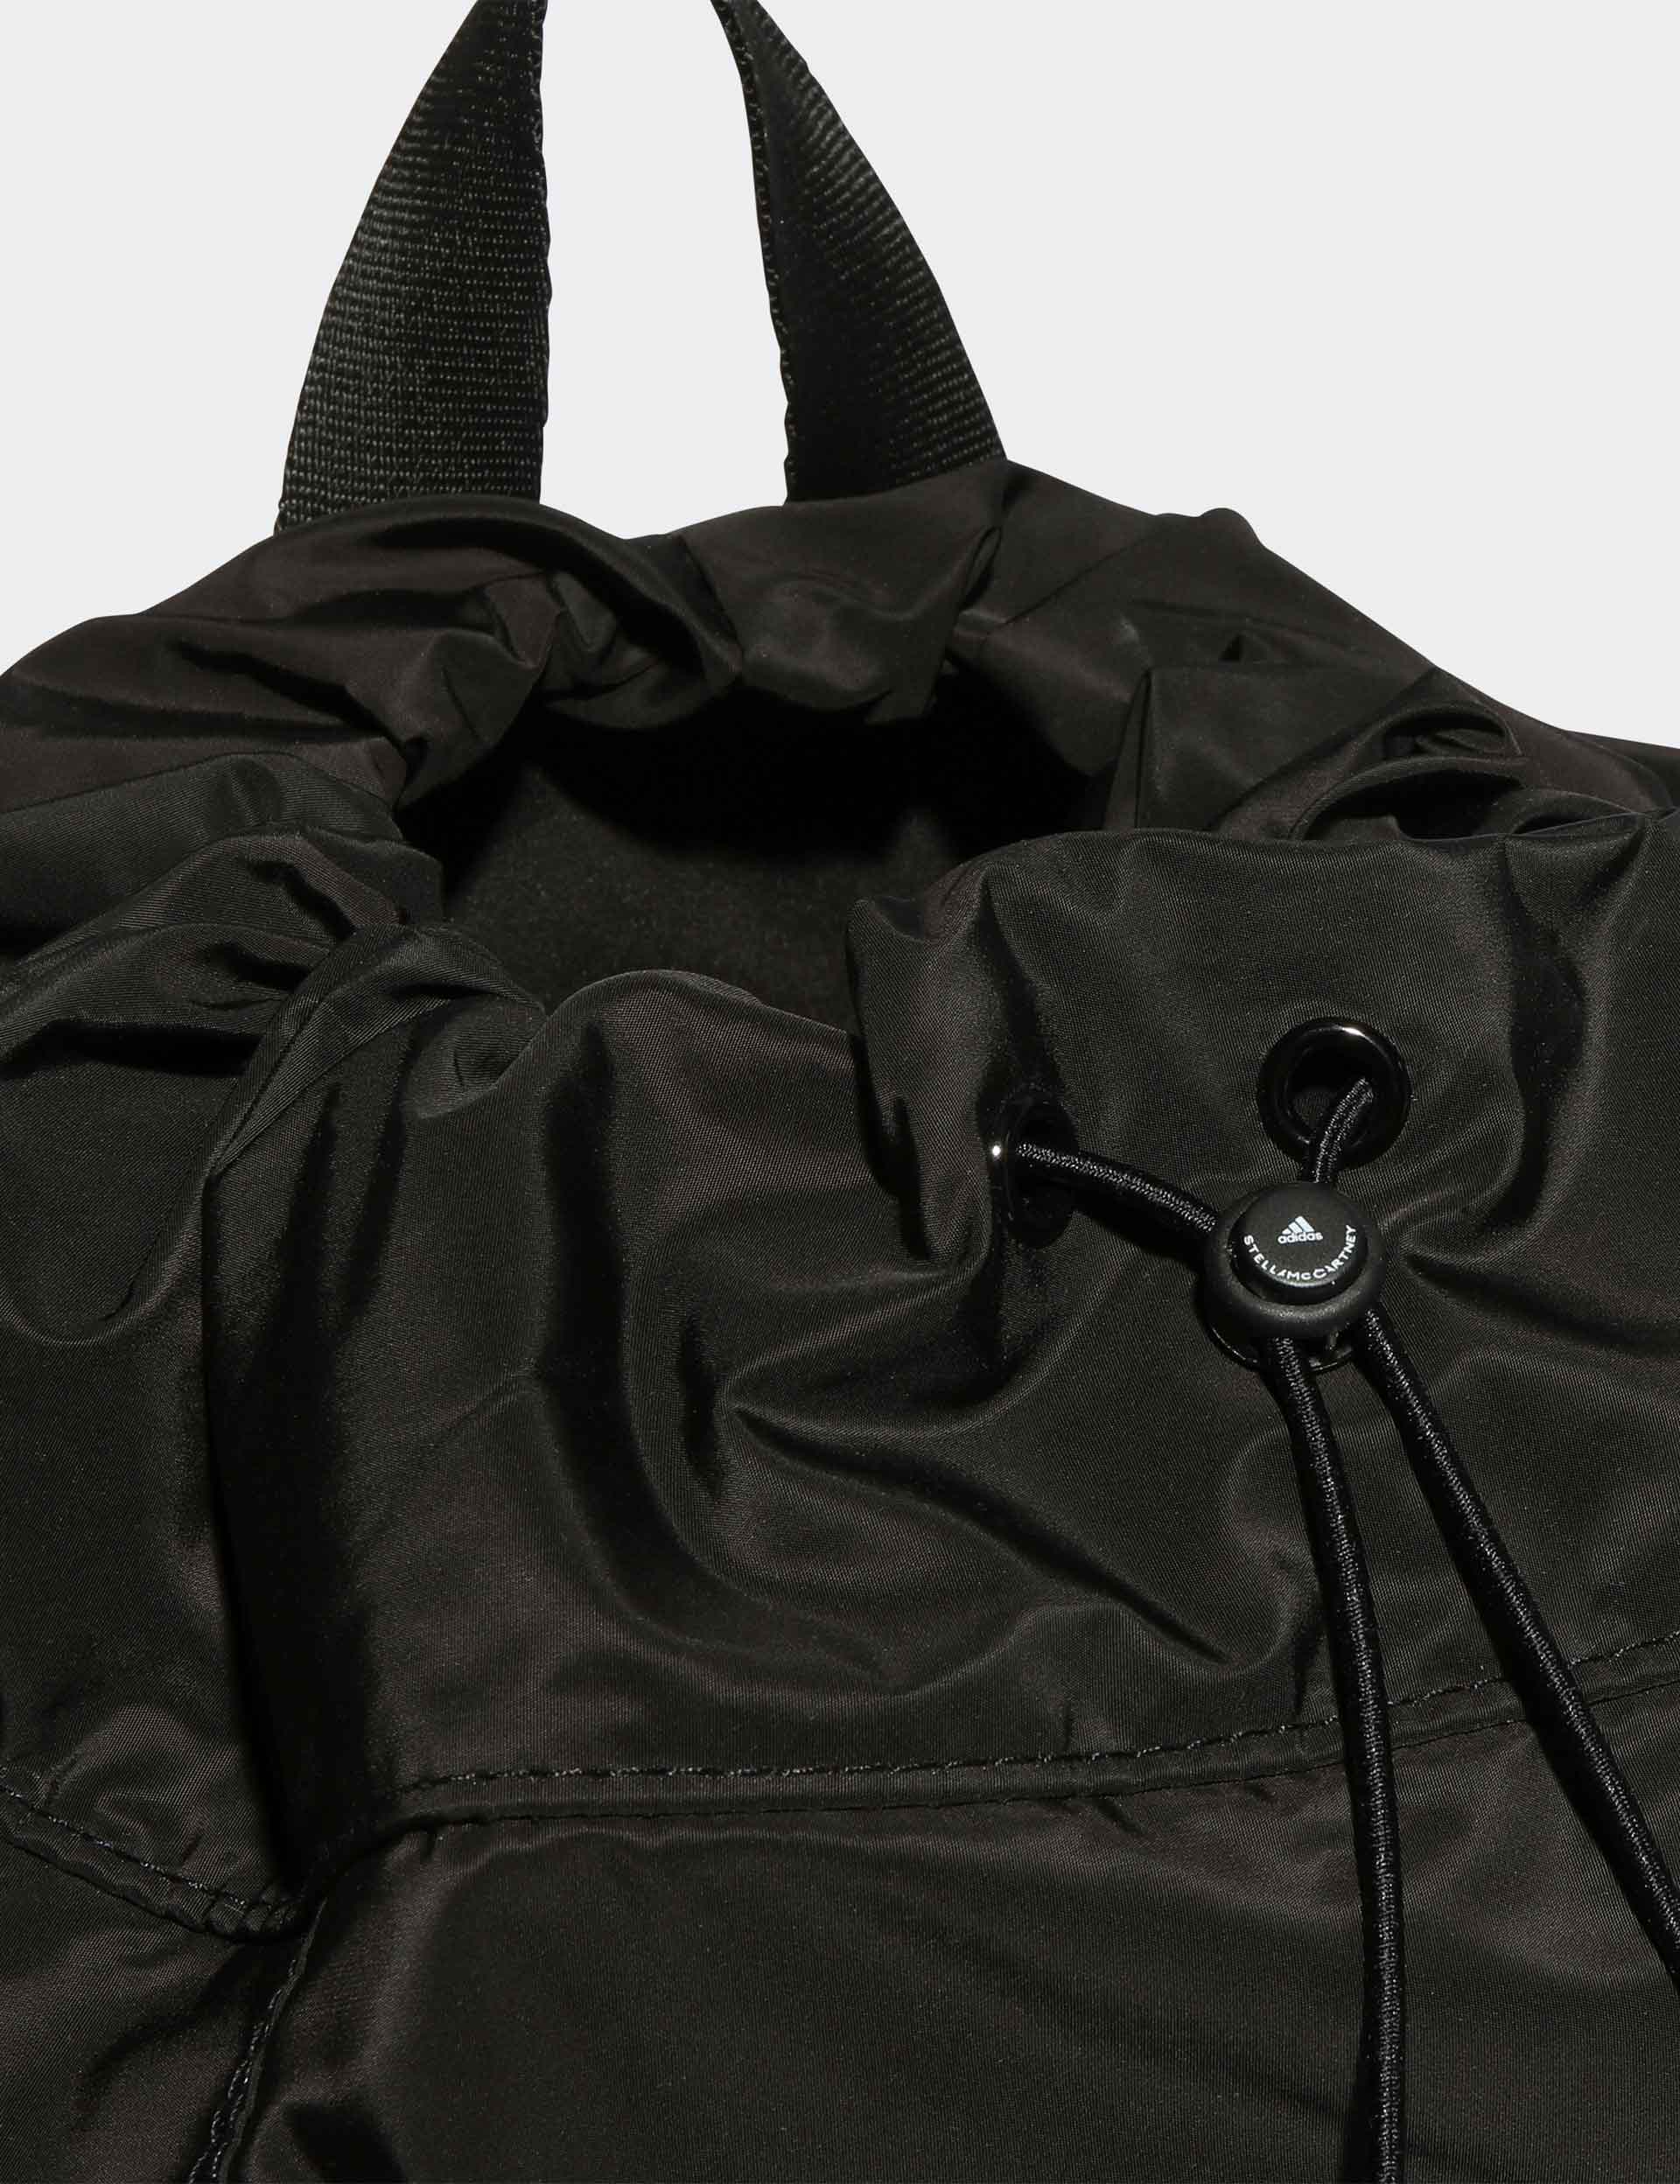 adidas vintage retro sac bag sport black